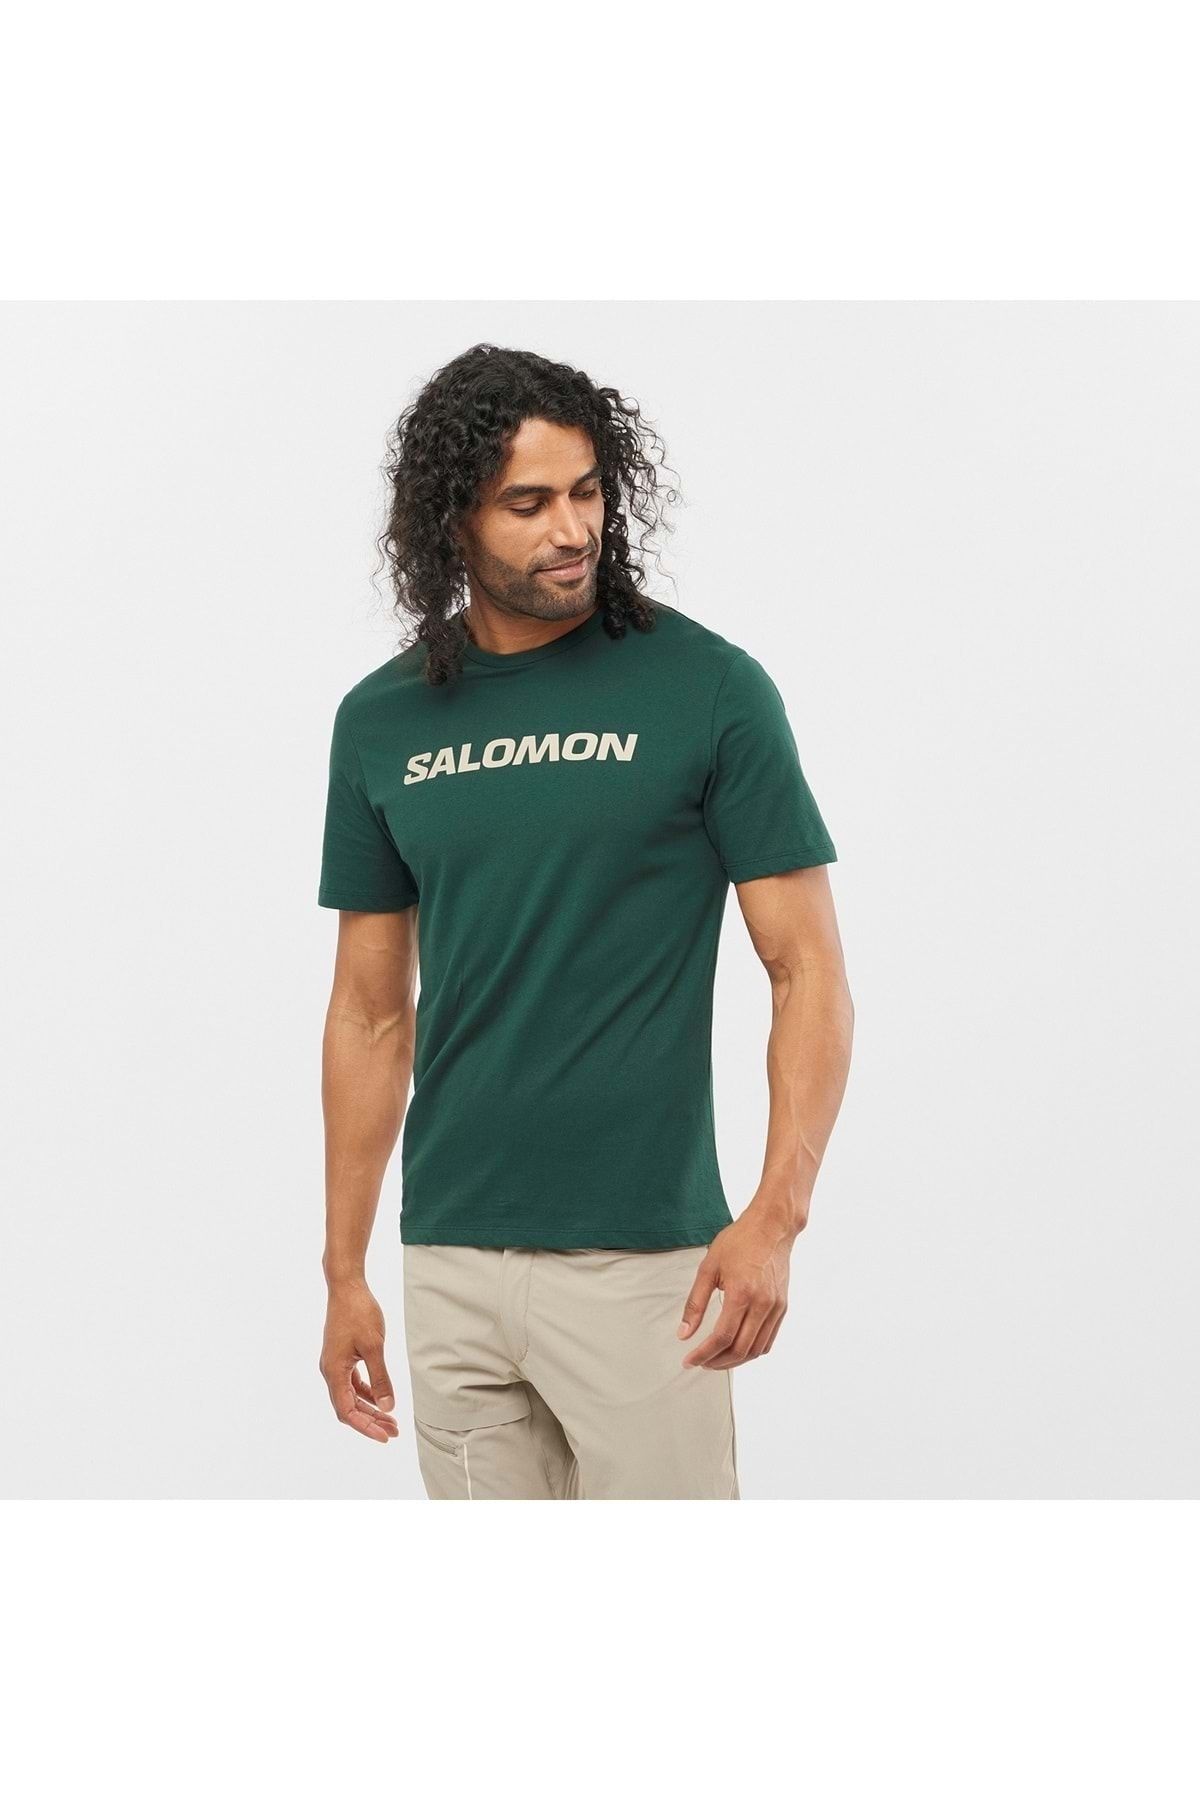 Salomon Outlife Logo Erkek T-shirt Lc1965100 Erkek Tişört